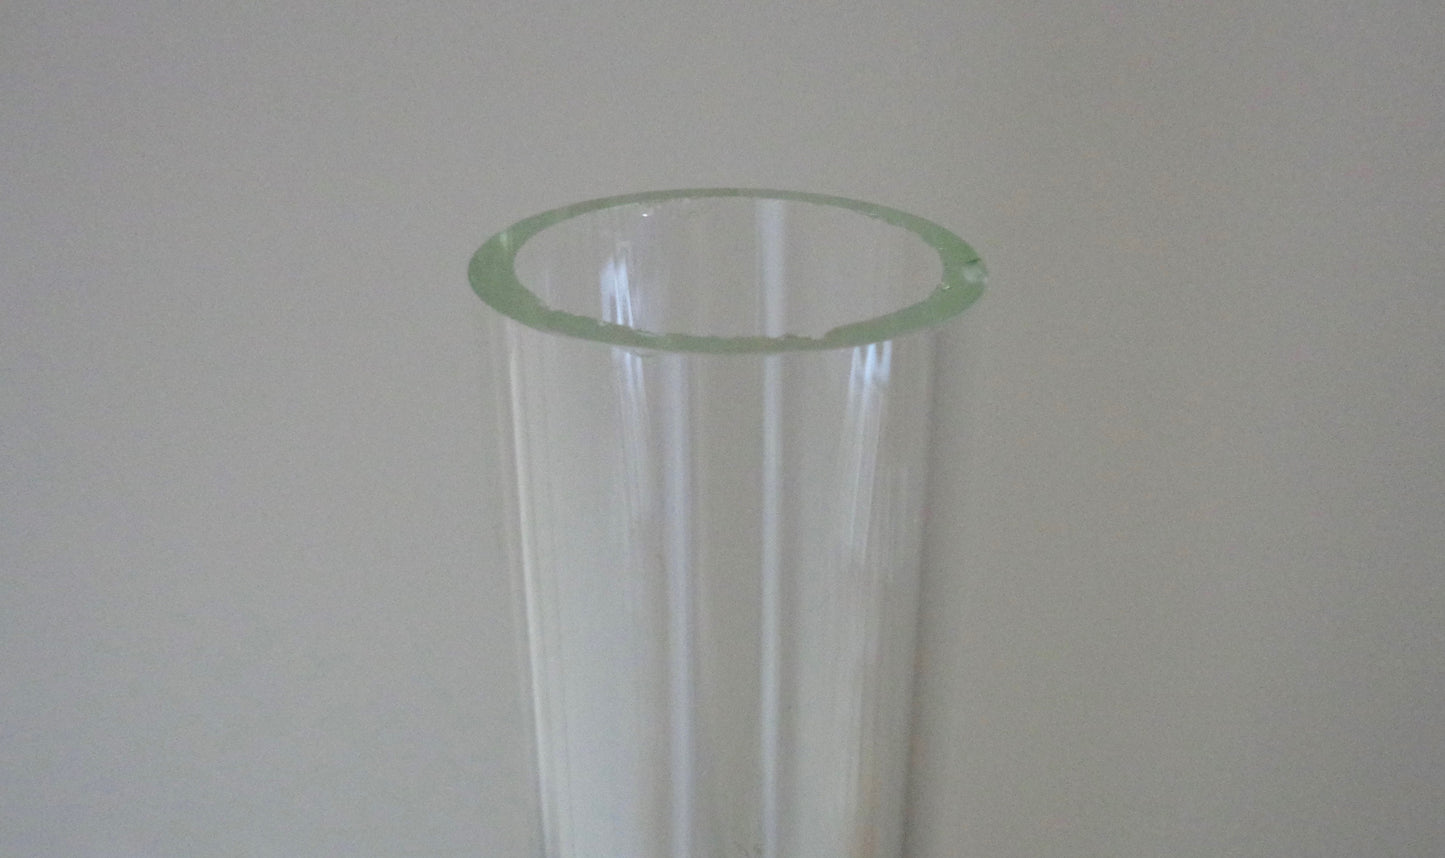 1920s Lead Crystal Cut Glass Measuring Cylinder Shaped Vase